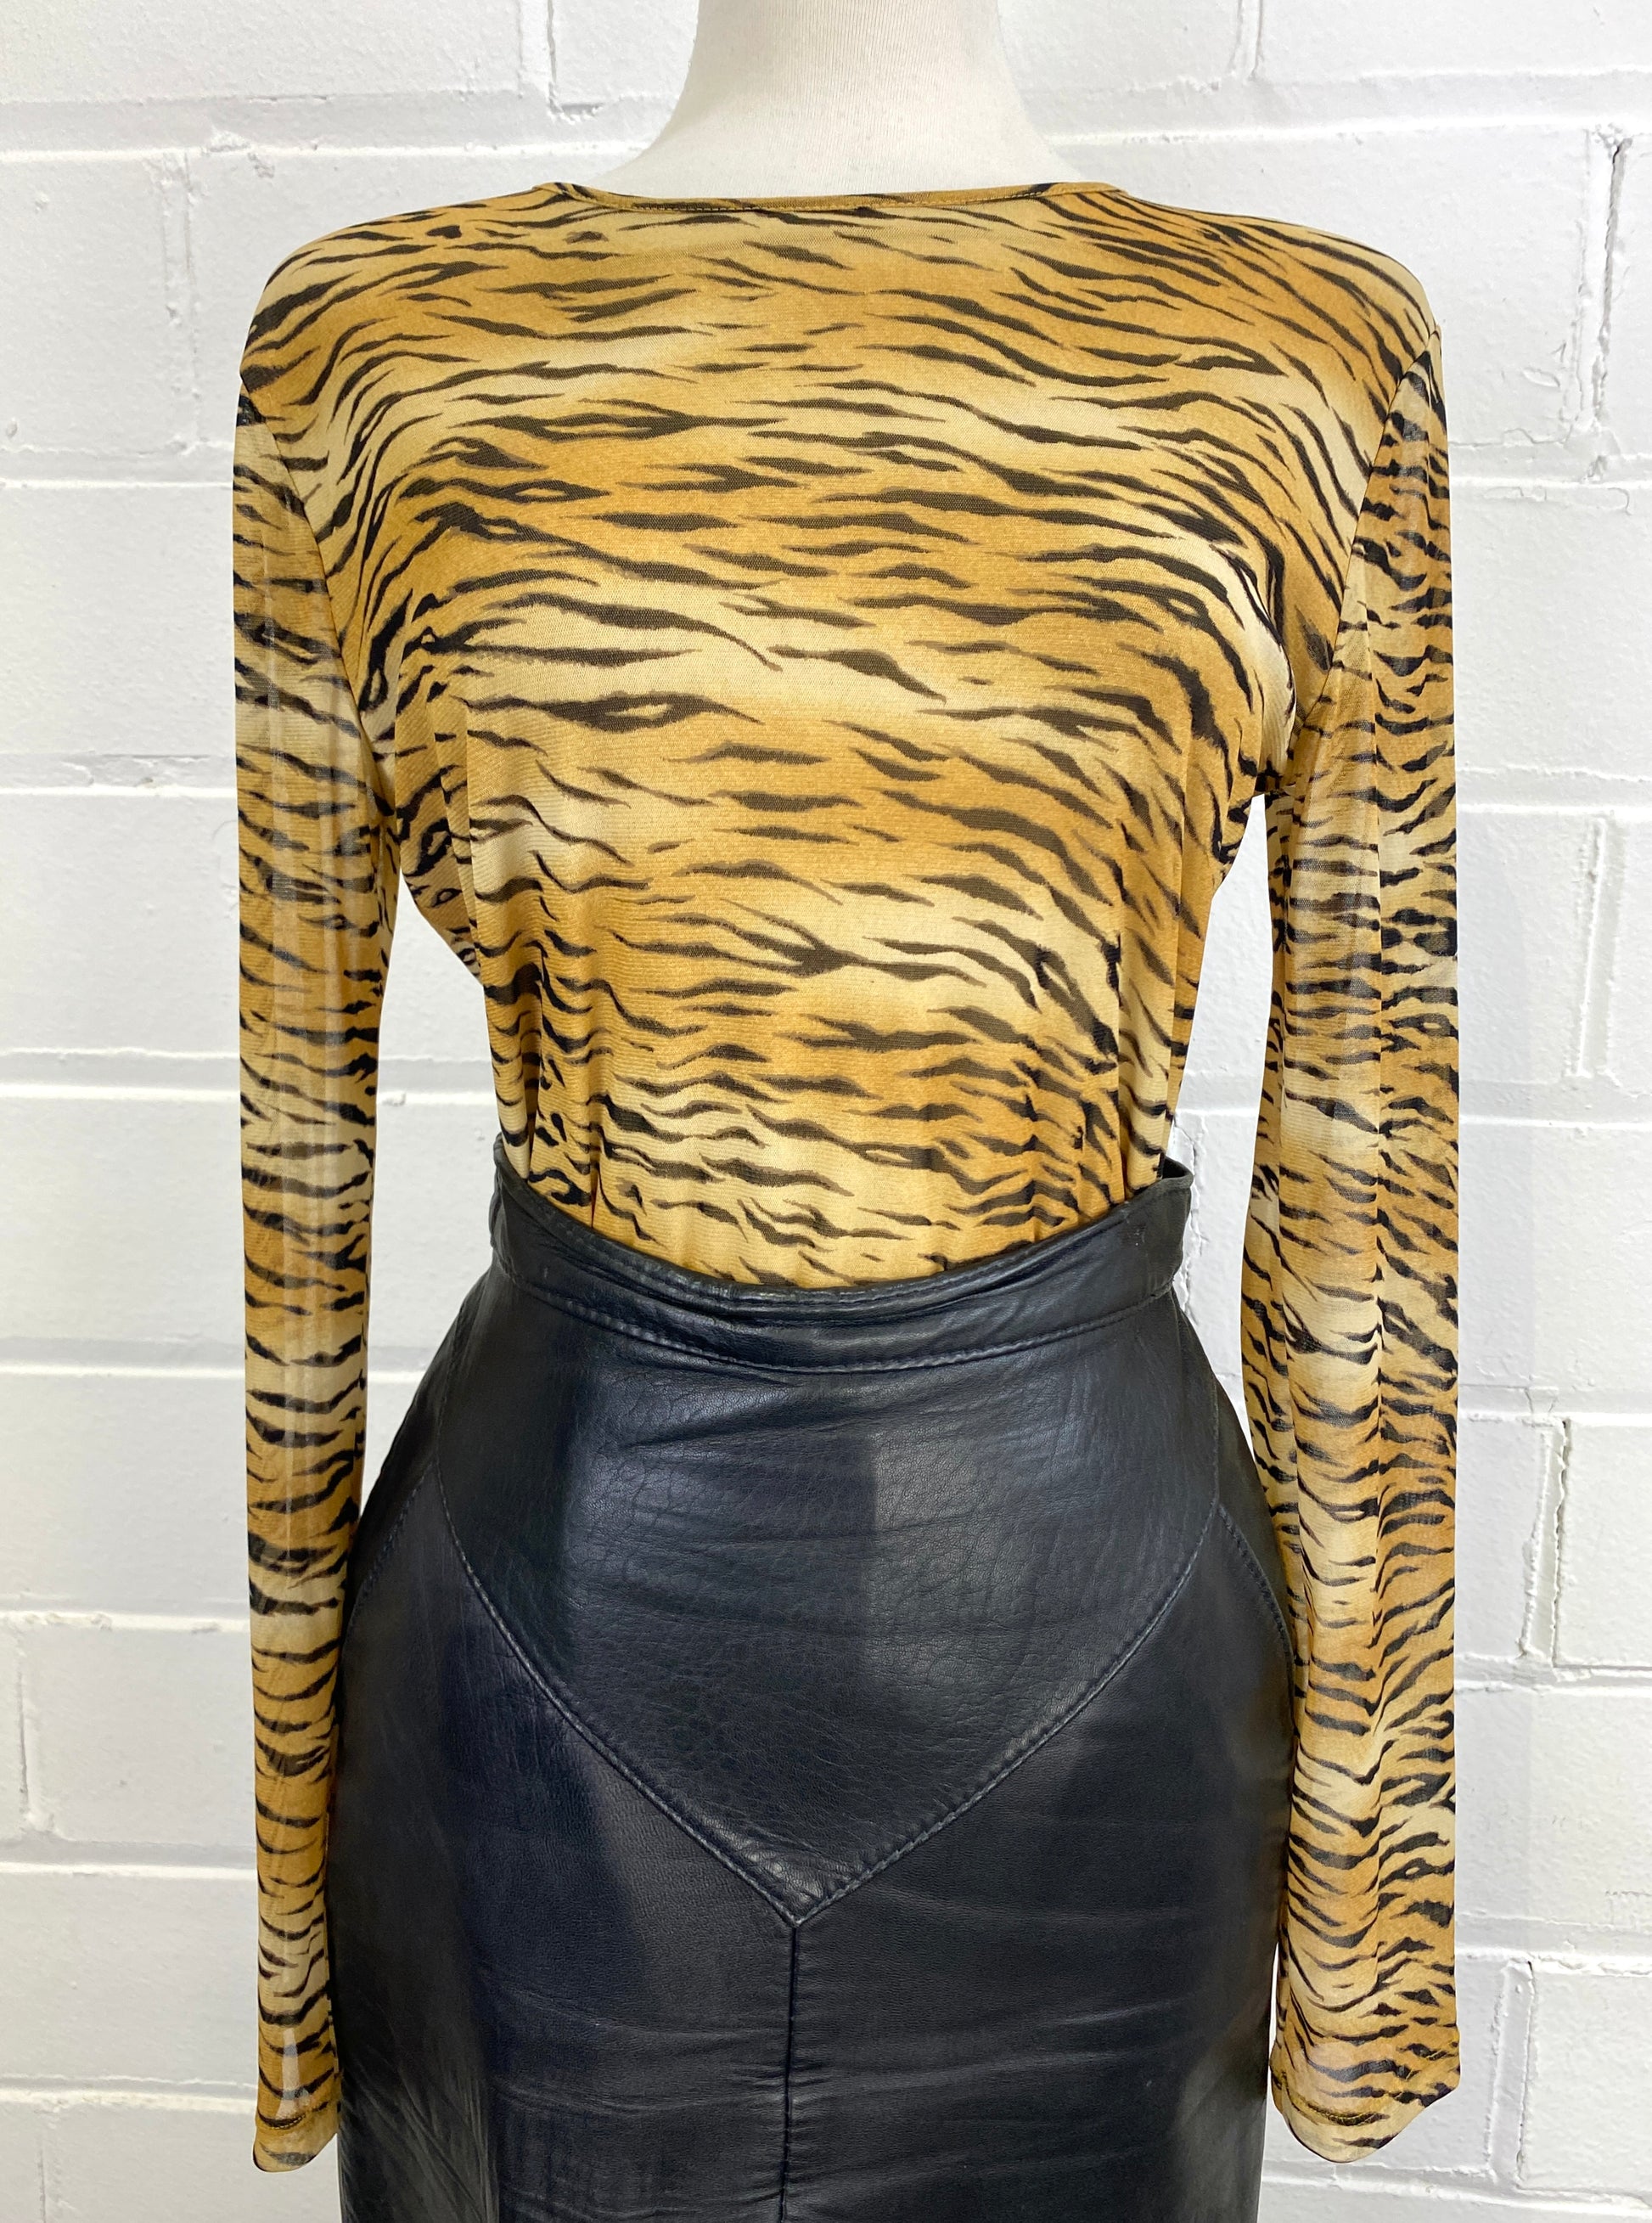 Early 2000s/ Y2K Tiger Print Nylon Long-Sleeve Top, Jones New York